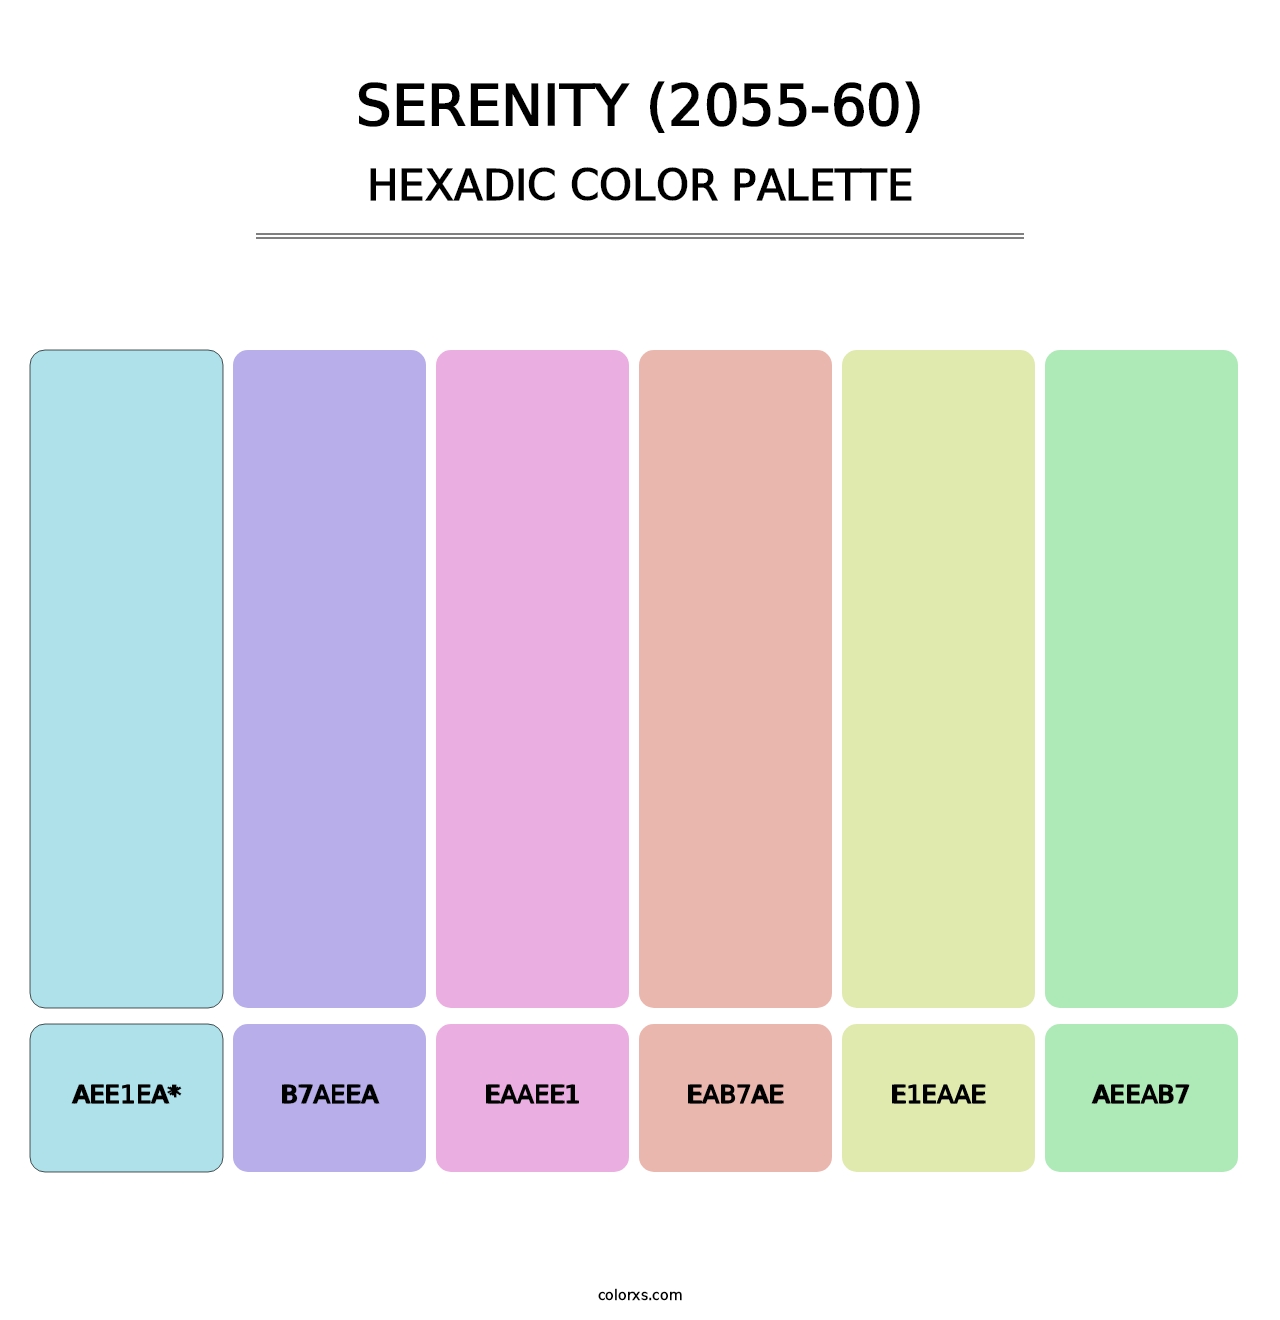 Serenity (2055-60) - Hexadic Color Palette